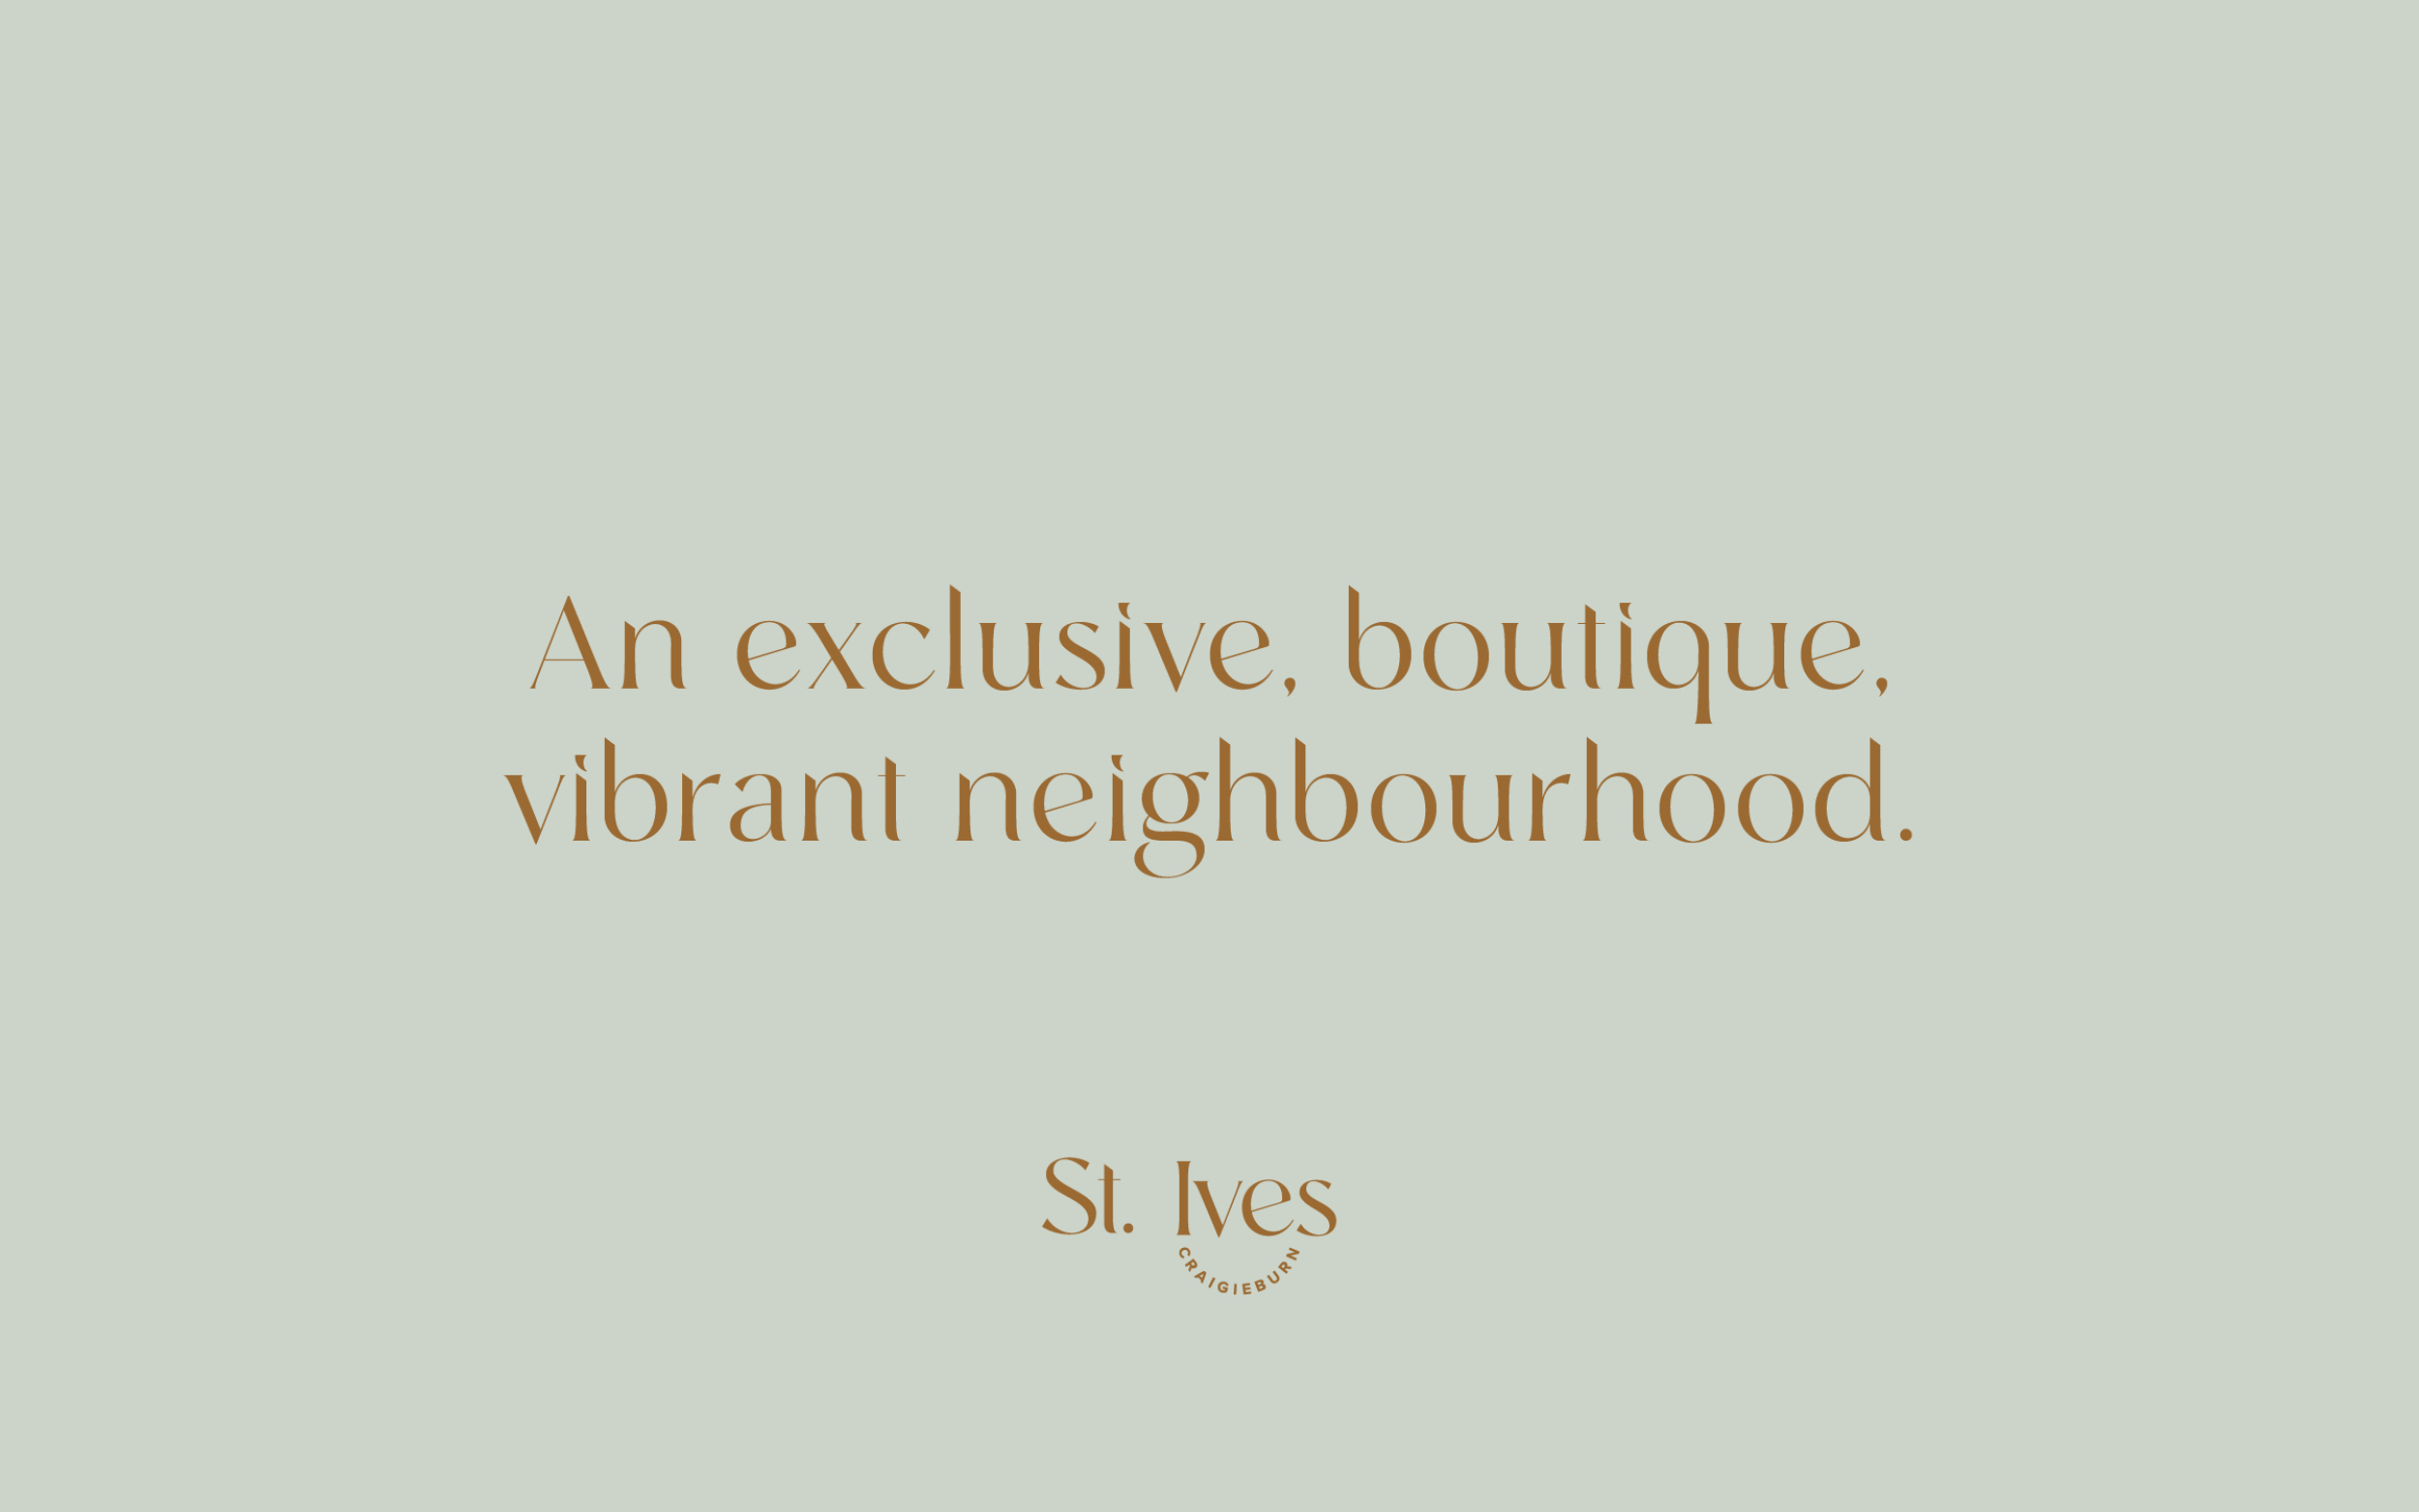 'An exclusive, boutique, vibrant neighbourhood.'